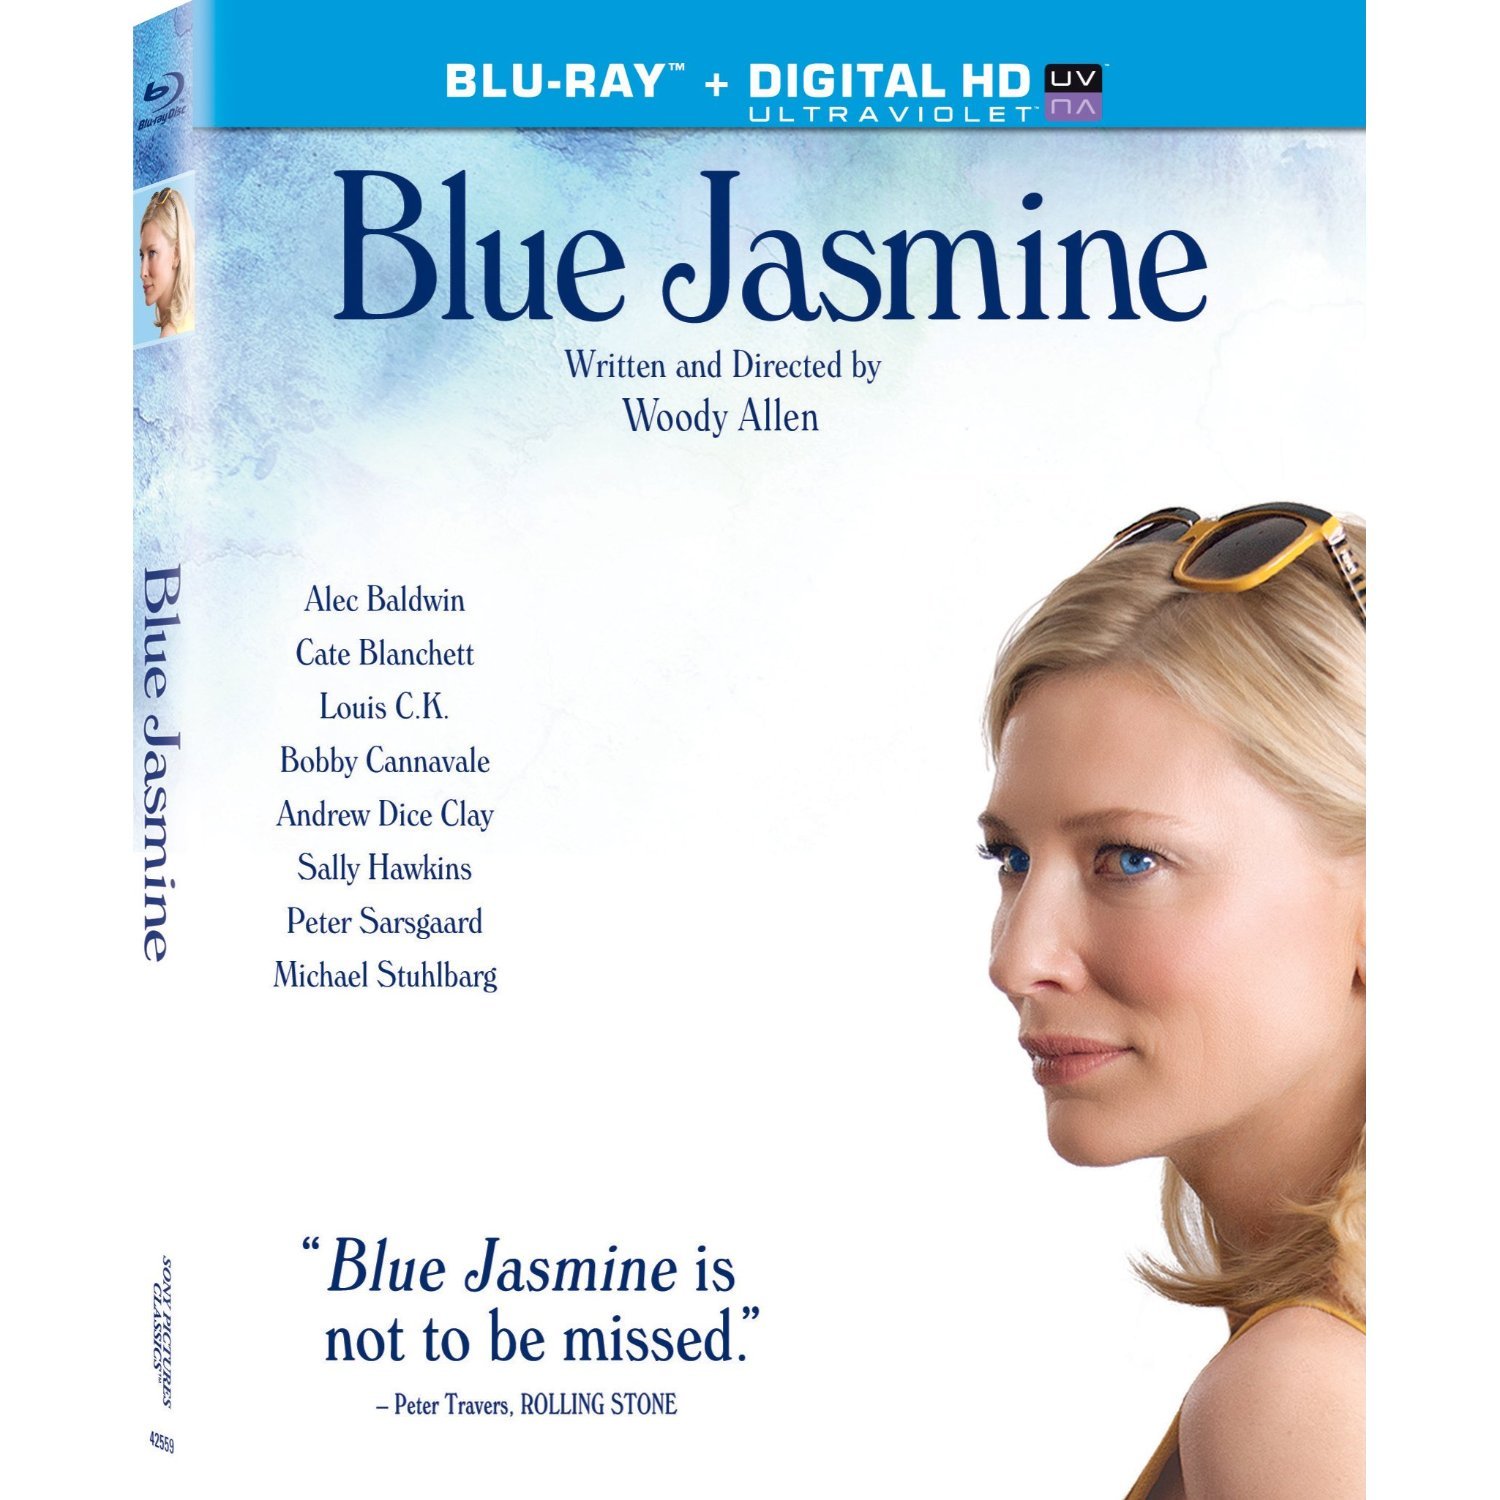 Blue Jasmine (Blu-ray + Digital HD with UltraViolet) on MovieShack